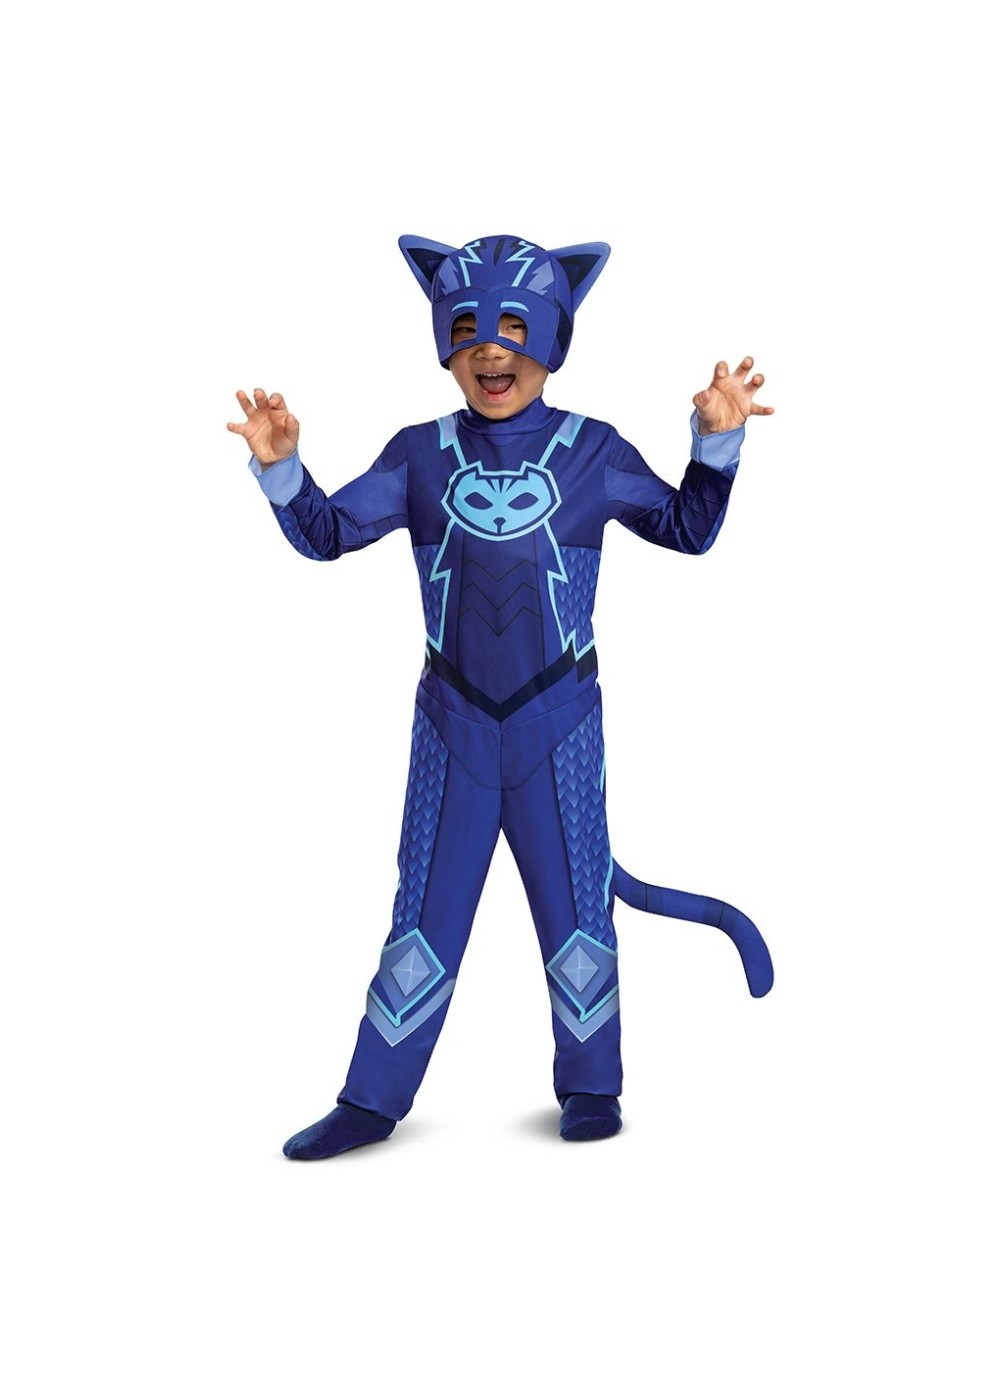 Catboy Megasuit Toddler Costume